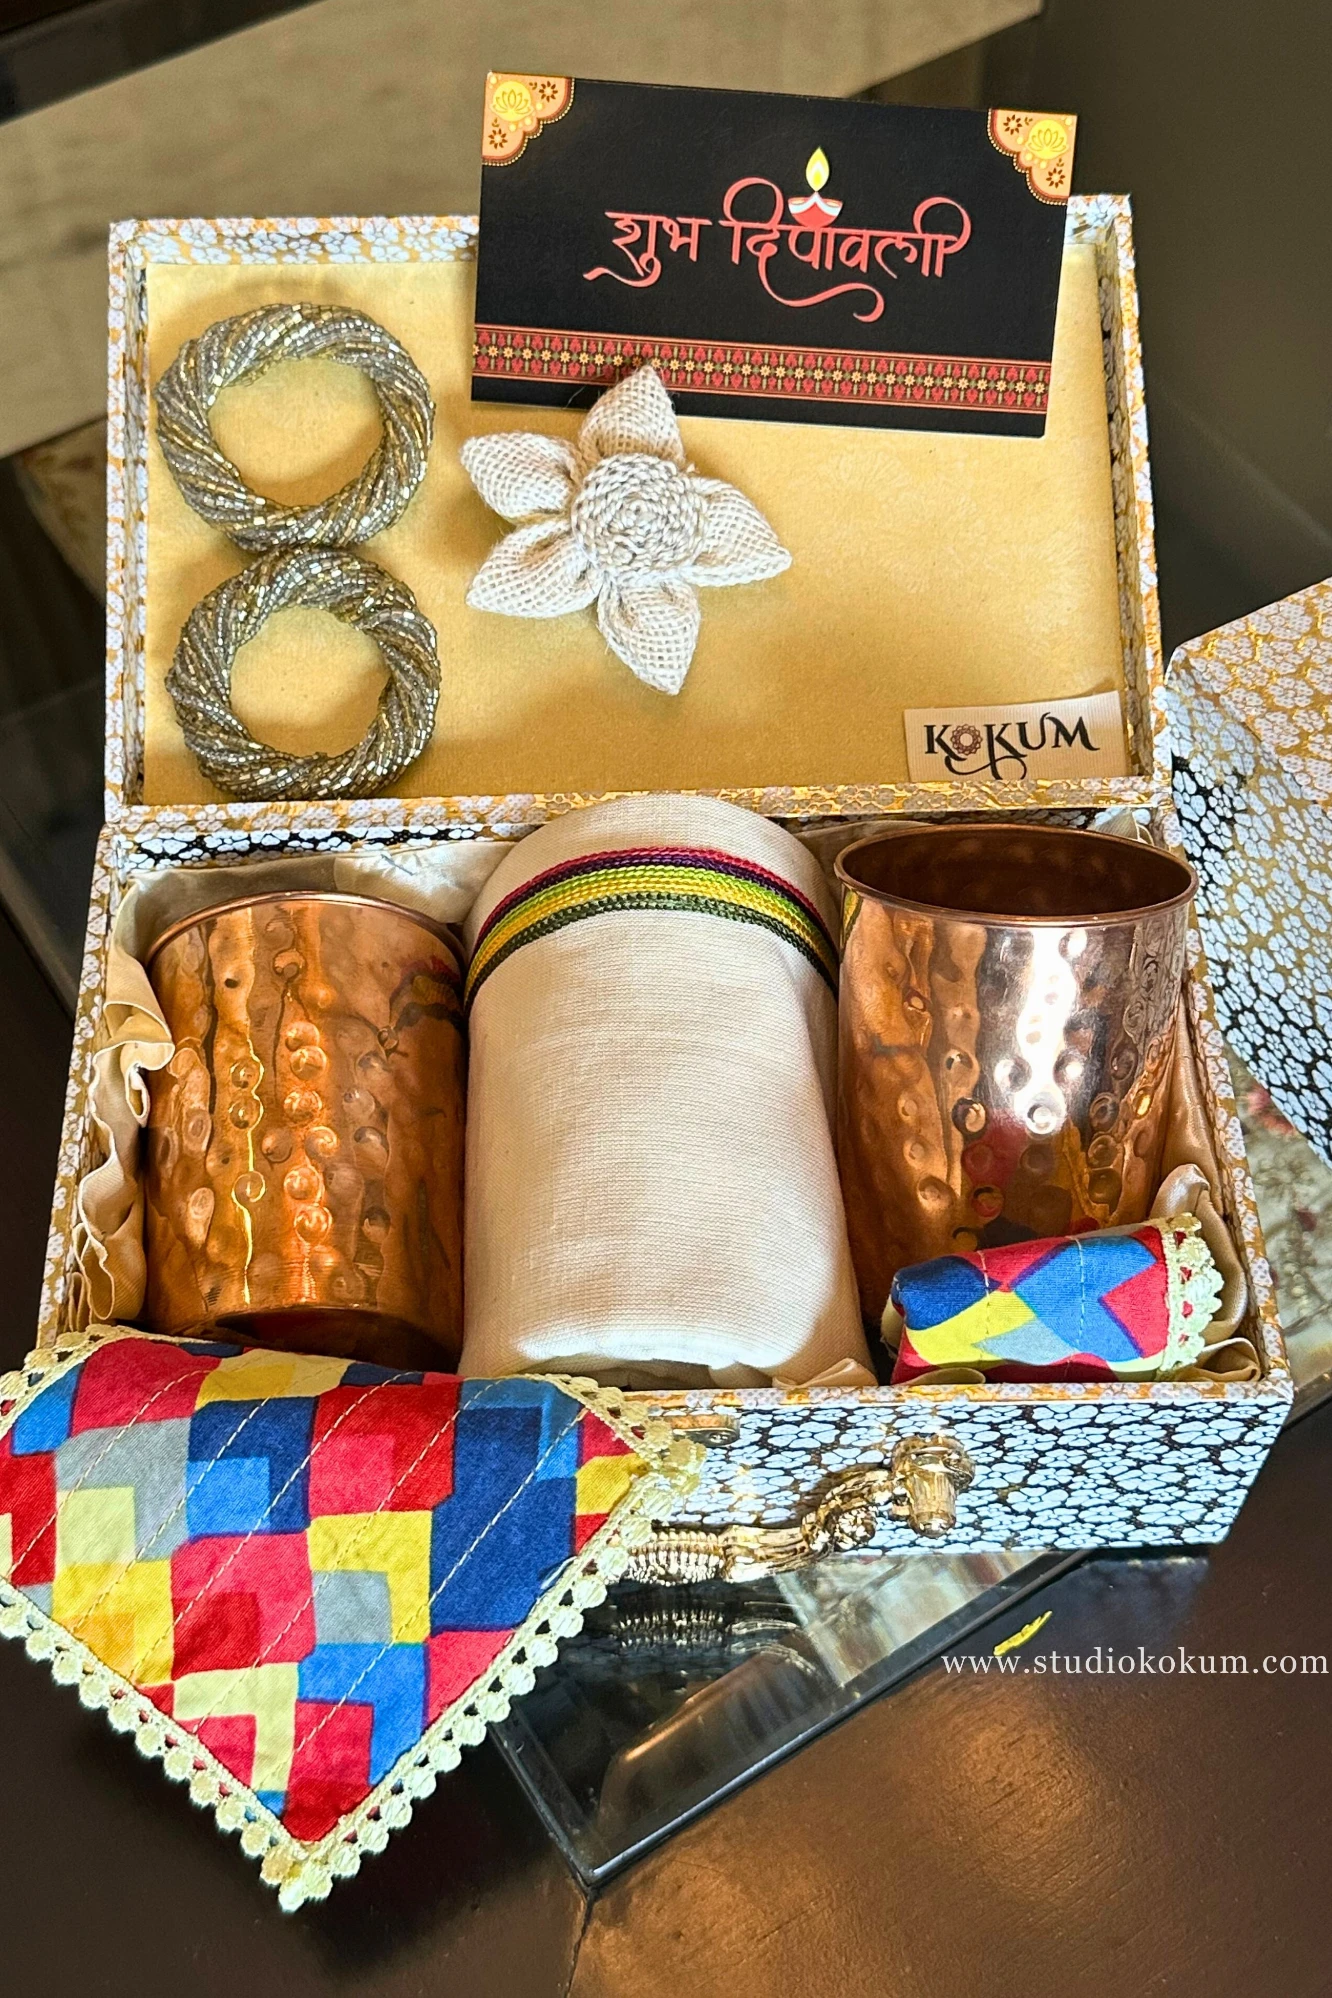 Ananda - The Kokum Box of Happiness